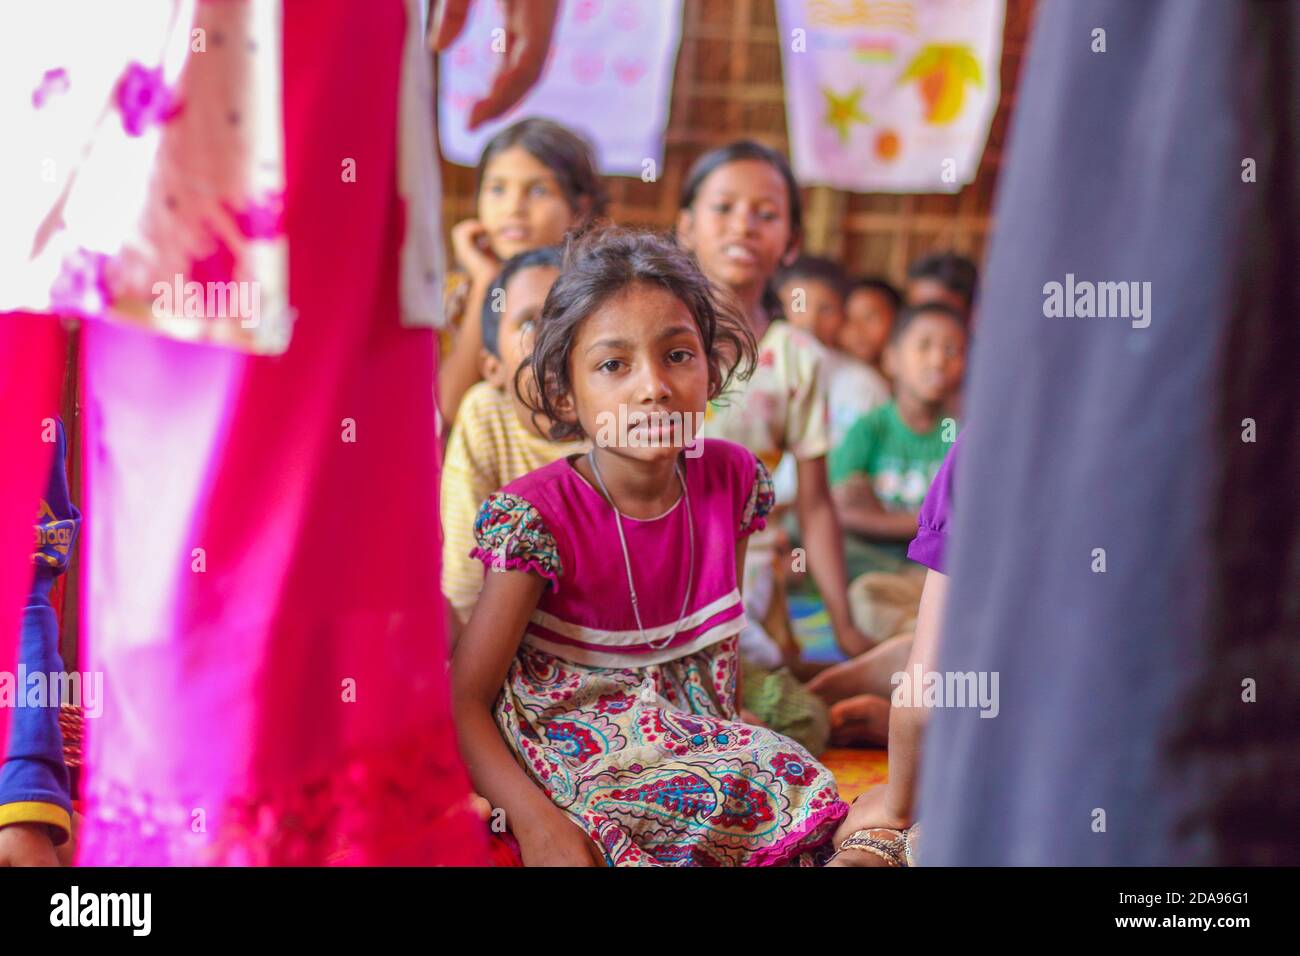 COX'S BAZAR, BANGLADESH - NOVEMBER 25, 2017: A girl Rohingya Muslims refugee child at the camp learning center. Stock Photo